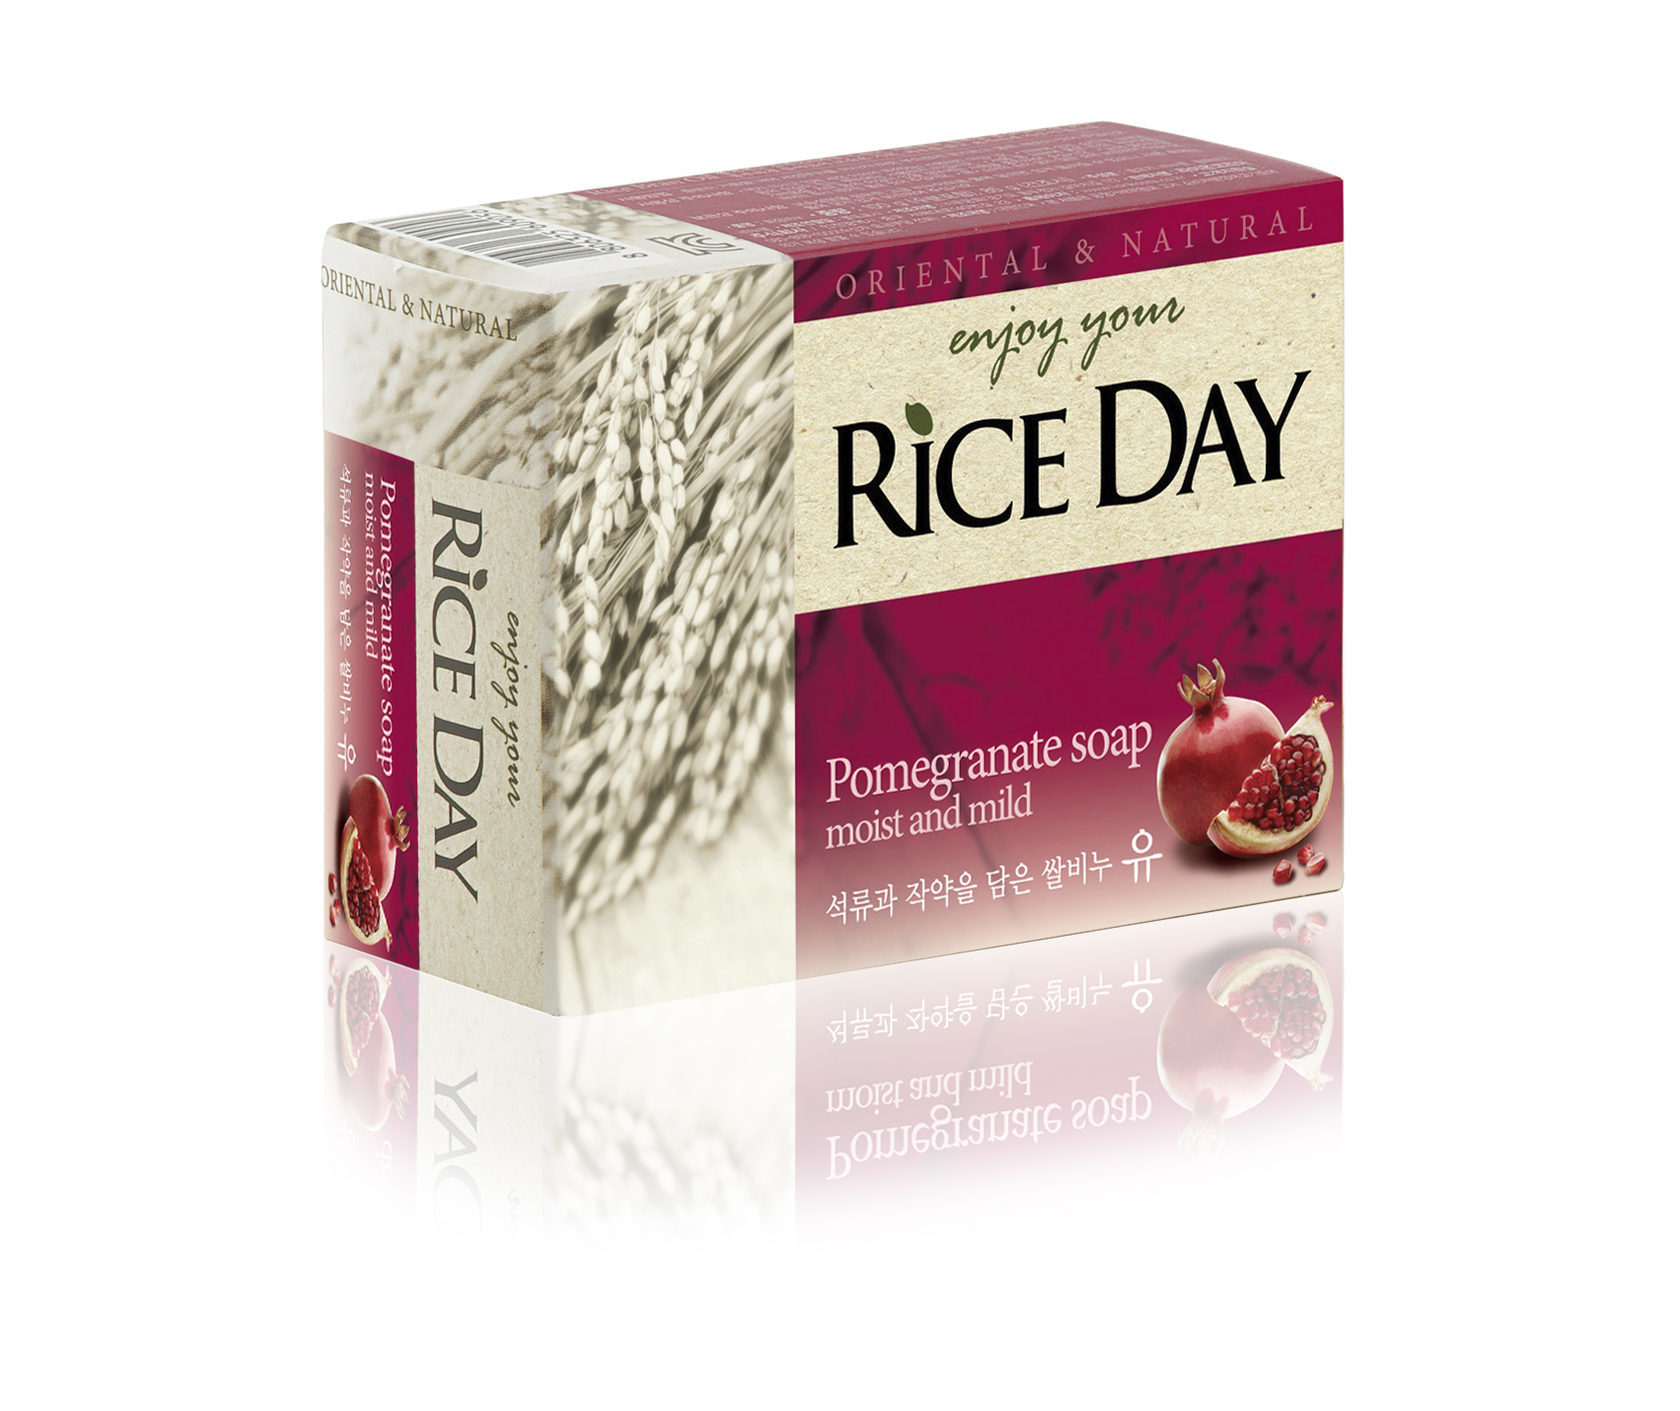 Rice day. Туалетное мыло "Rice Day" с гранатом и пионом, 100 г.. Lion туалетное мыло с рисовыми отрубями Rice Day 100 гр. Корея. Мыло туалетное CJ Lion Rice Day с экстрактом лотоса 100 гр. Rice Day мыло гранат.